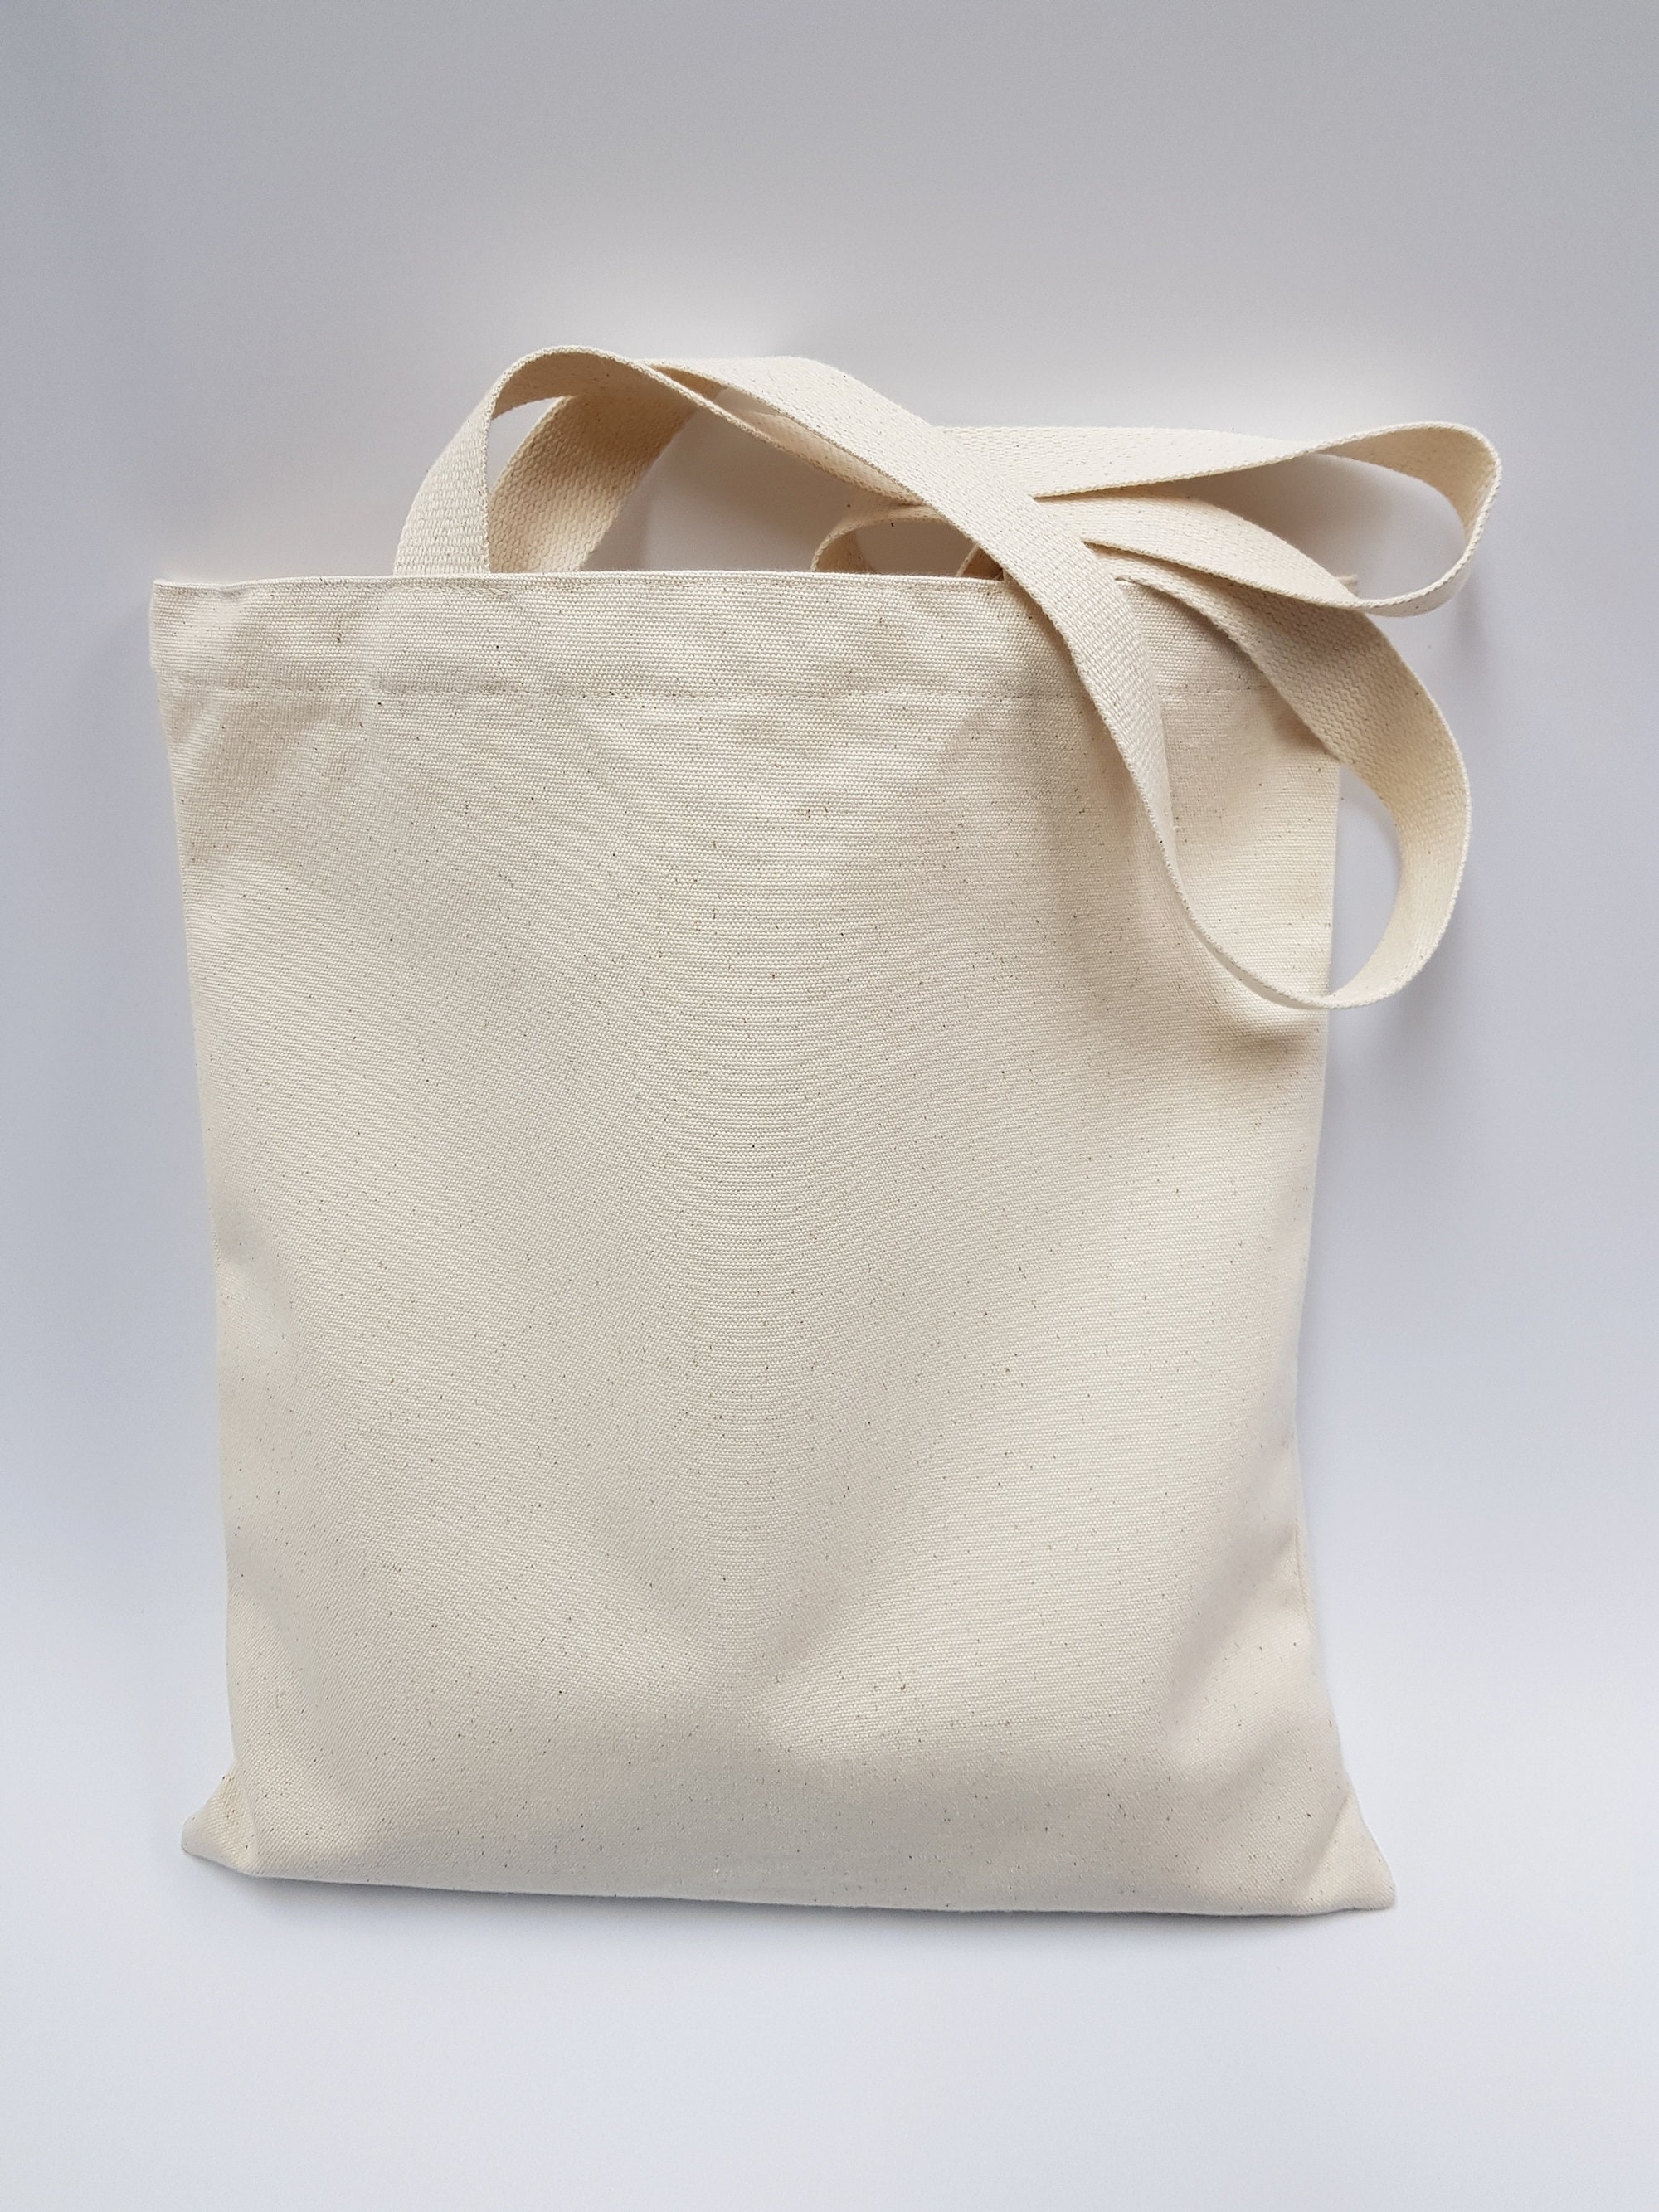 Cotton Canvas Multi Color Custom Basic Tote Bag - 15x15 $1.71